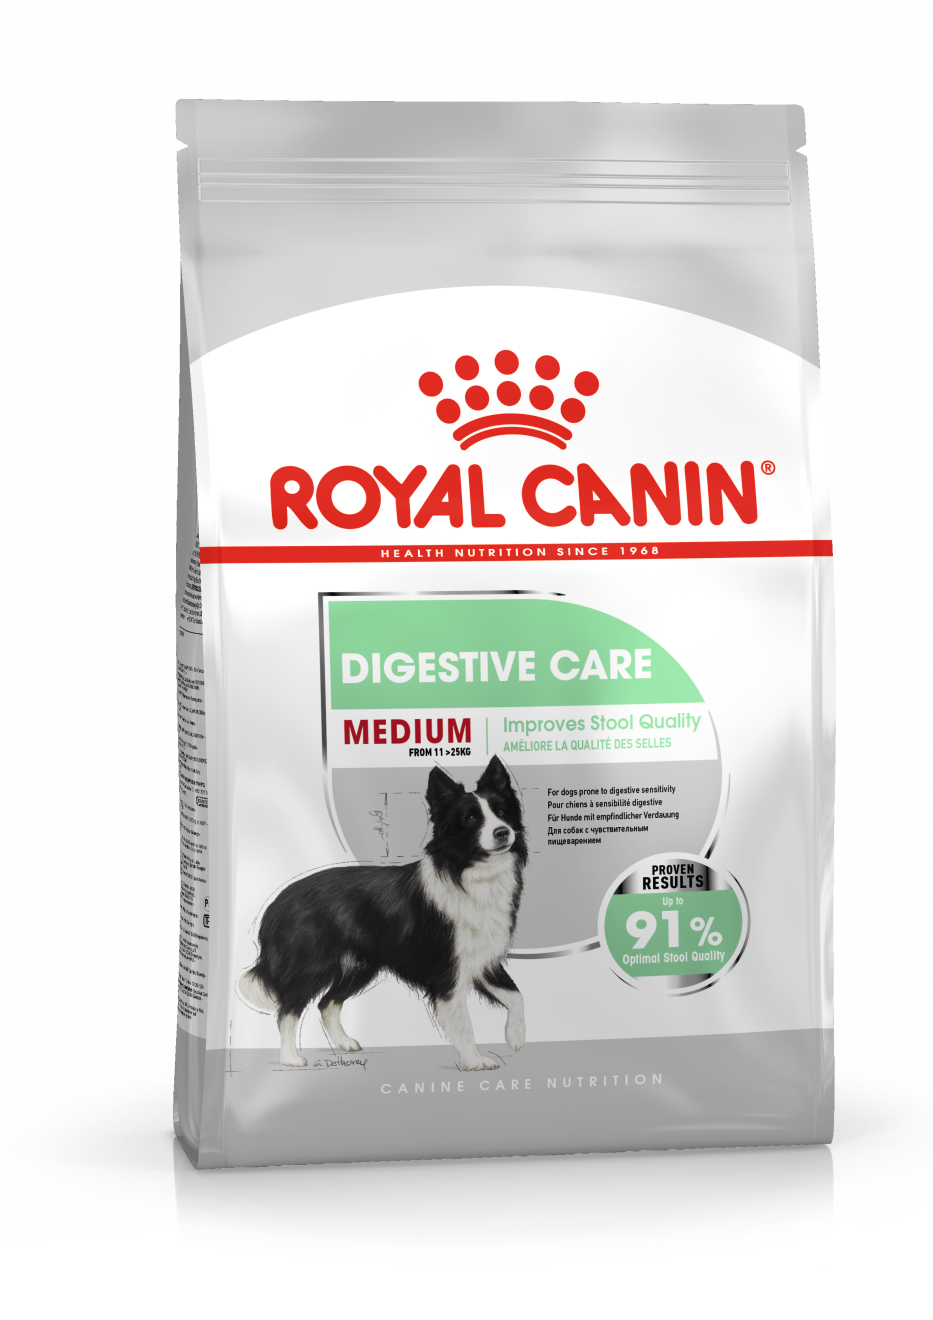 ROYAL CANIN® Digestive Care Medium voor volwassen en oudere honden van middelgrote rassen (van 11 tot 25 kg) 3kg